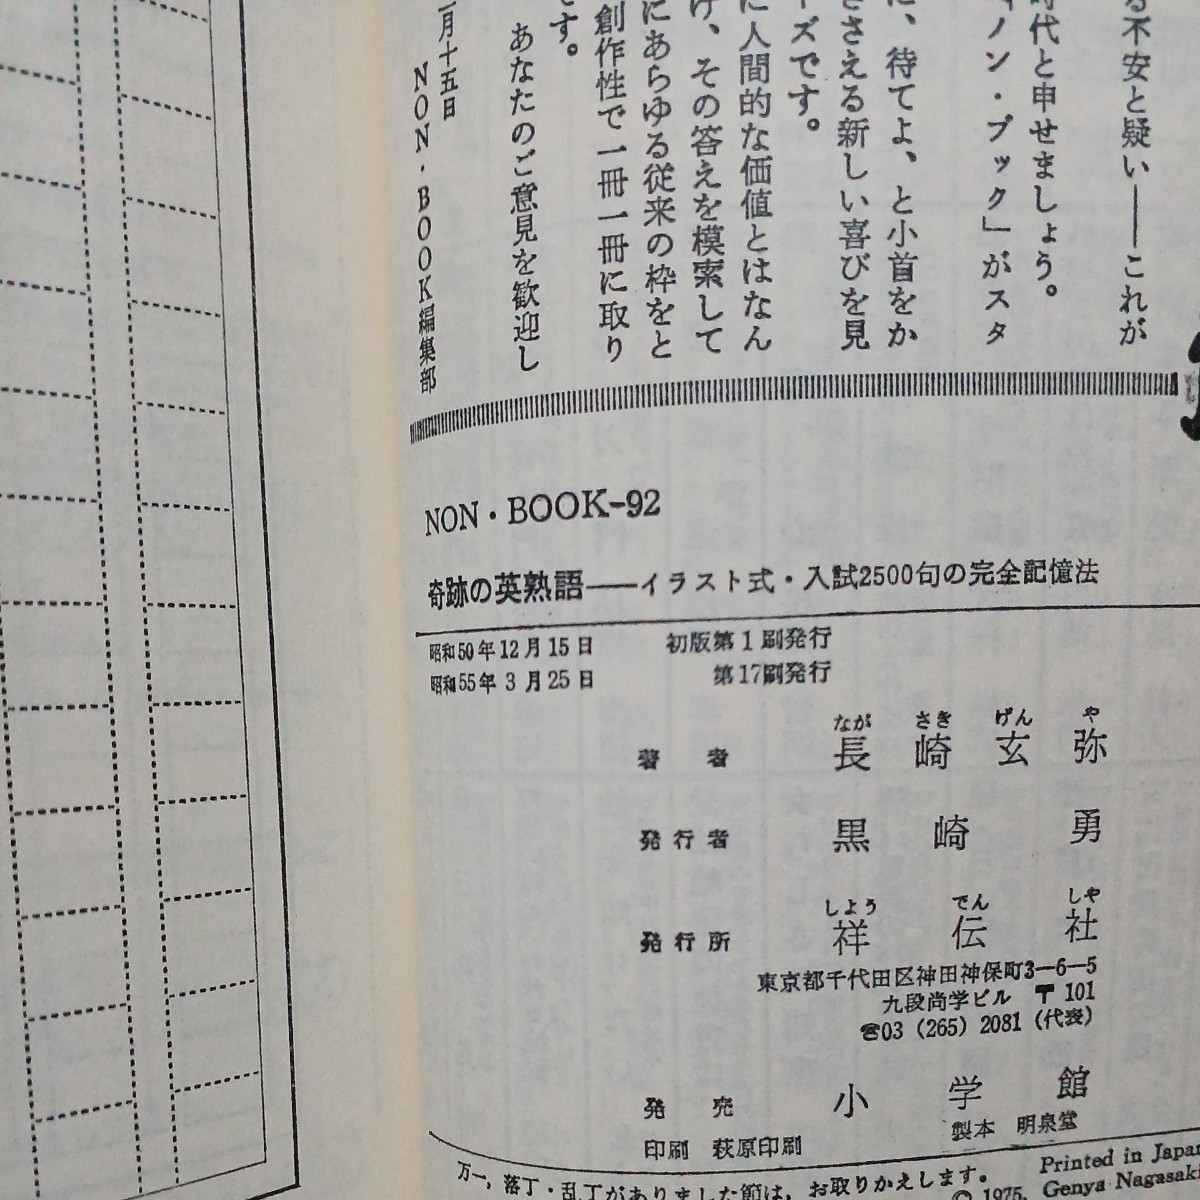  wonderful britain idiom illustration type * entrance examination 2500.. complete memory law Nagasaki ..NONBOOK